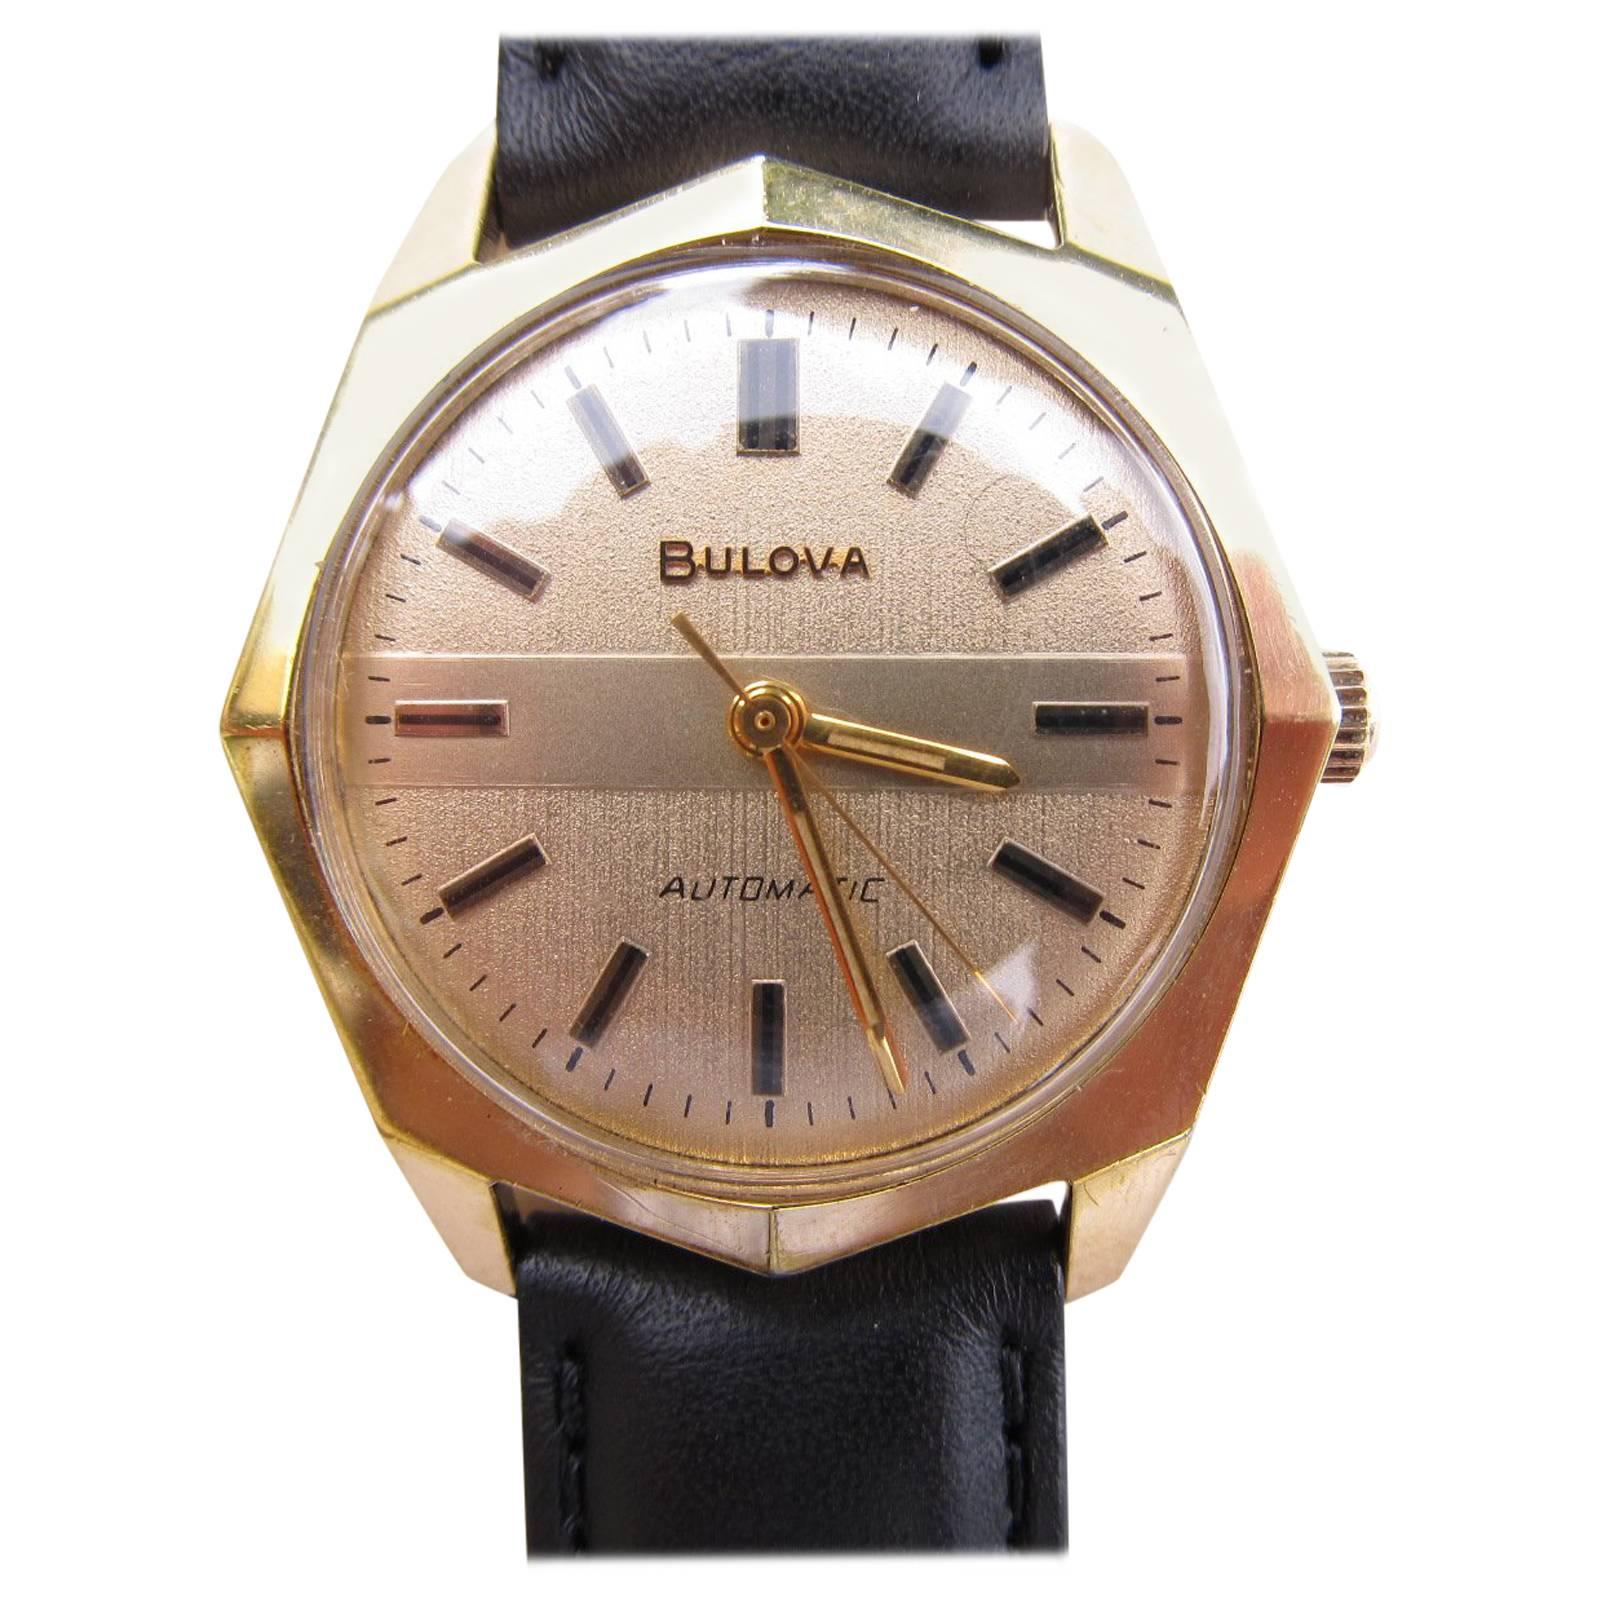 Octagon Case Bulova Automatic Watch, 1973